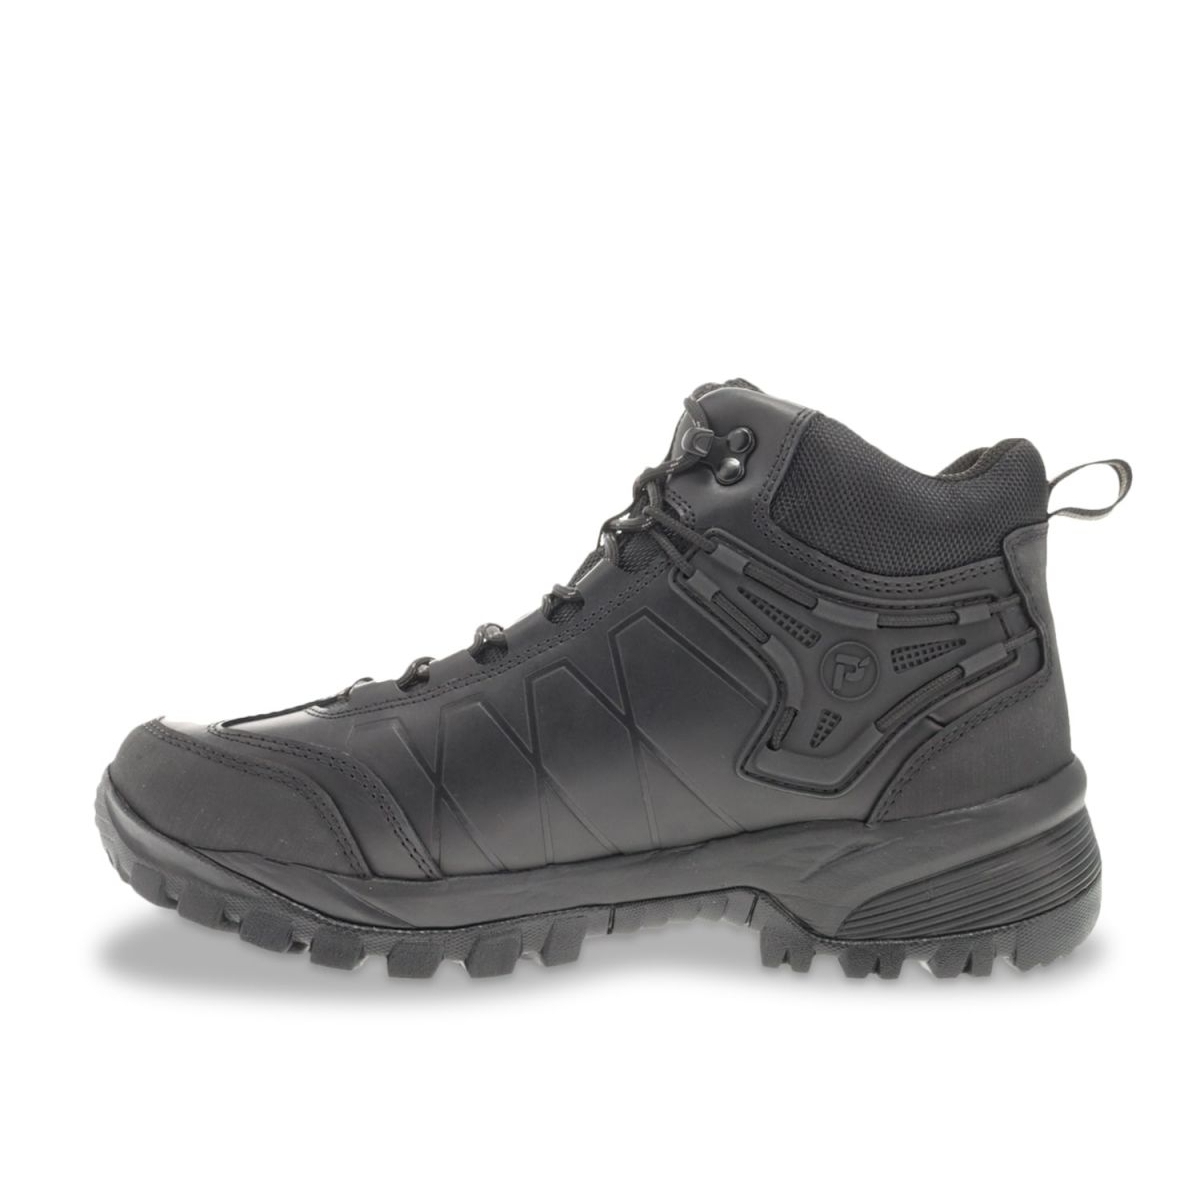 Propet Men's Ridge Walker Force Hiking Boots Black - MBA052LBLK BLACK - BLACK, 15 Wide